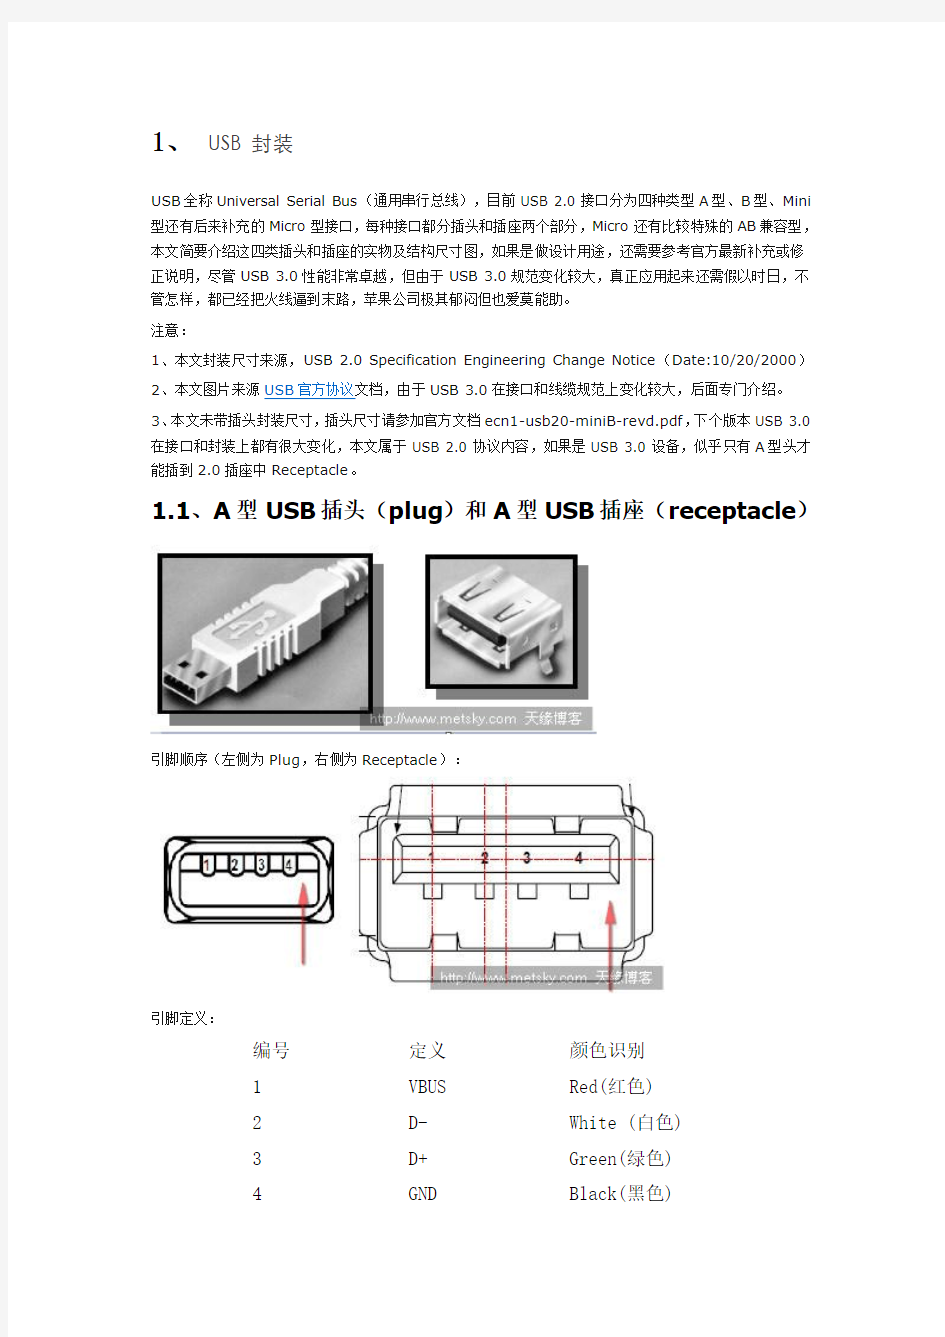 USB2.0 A型、B型、Mini和Micro接口定义及封装